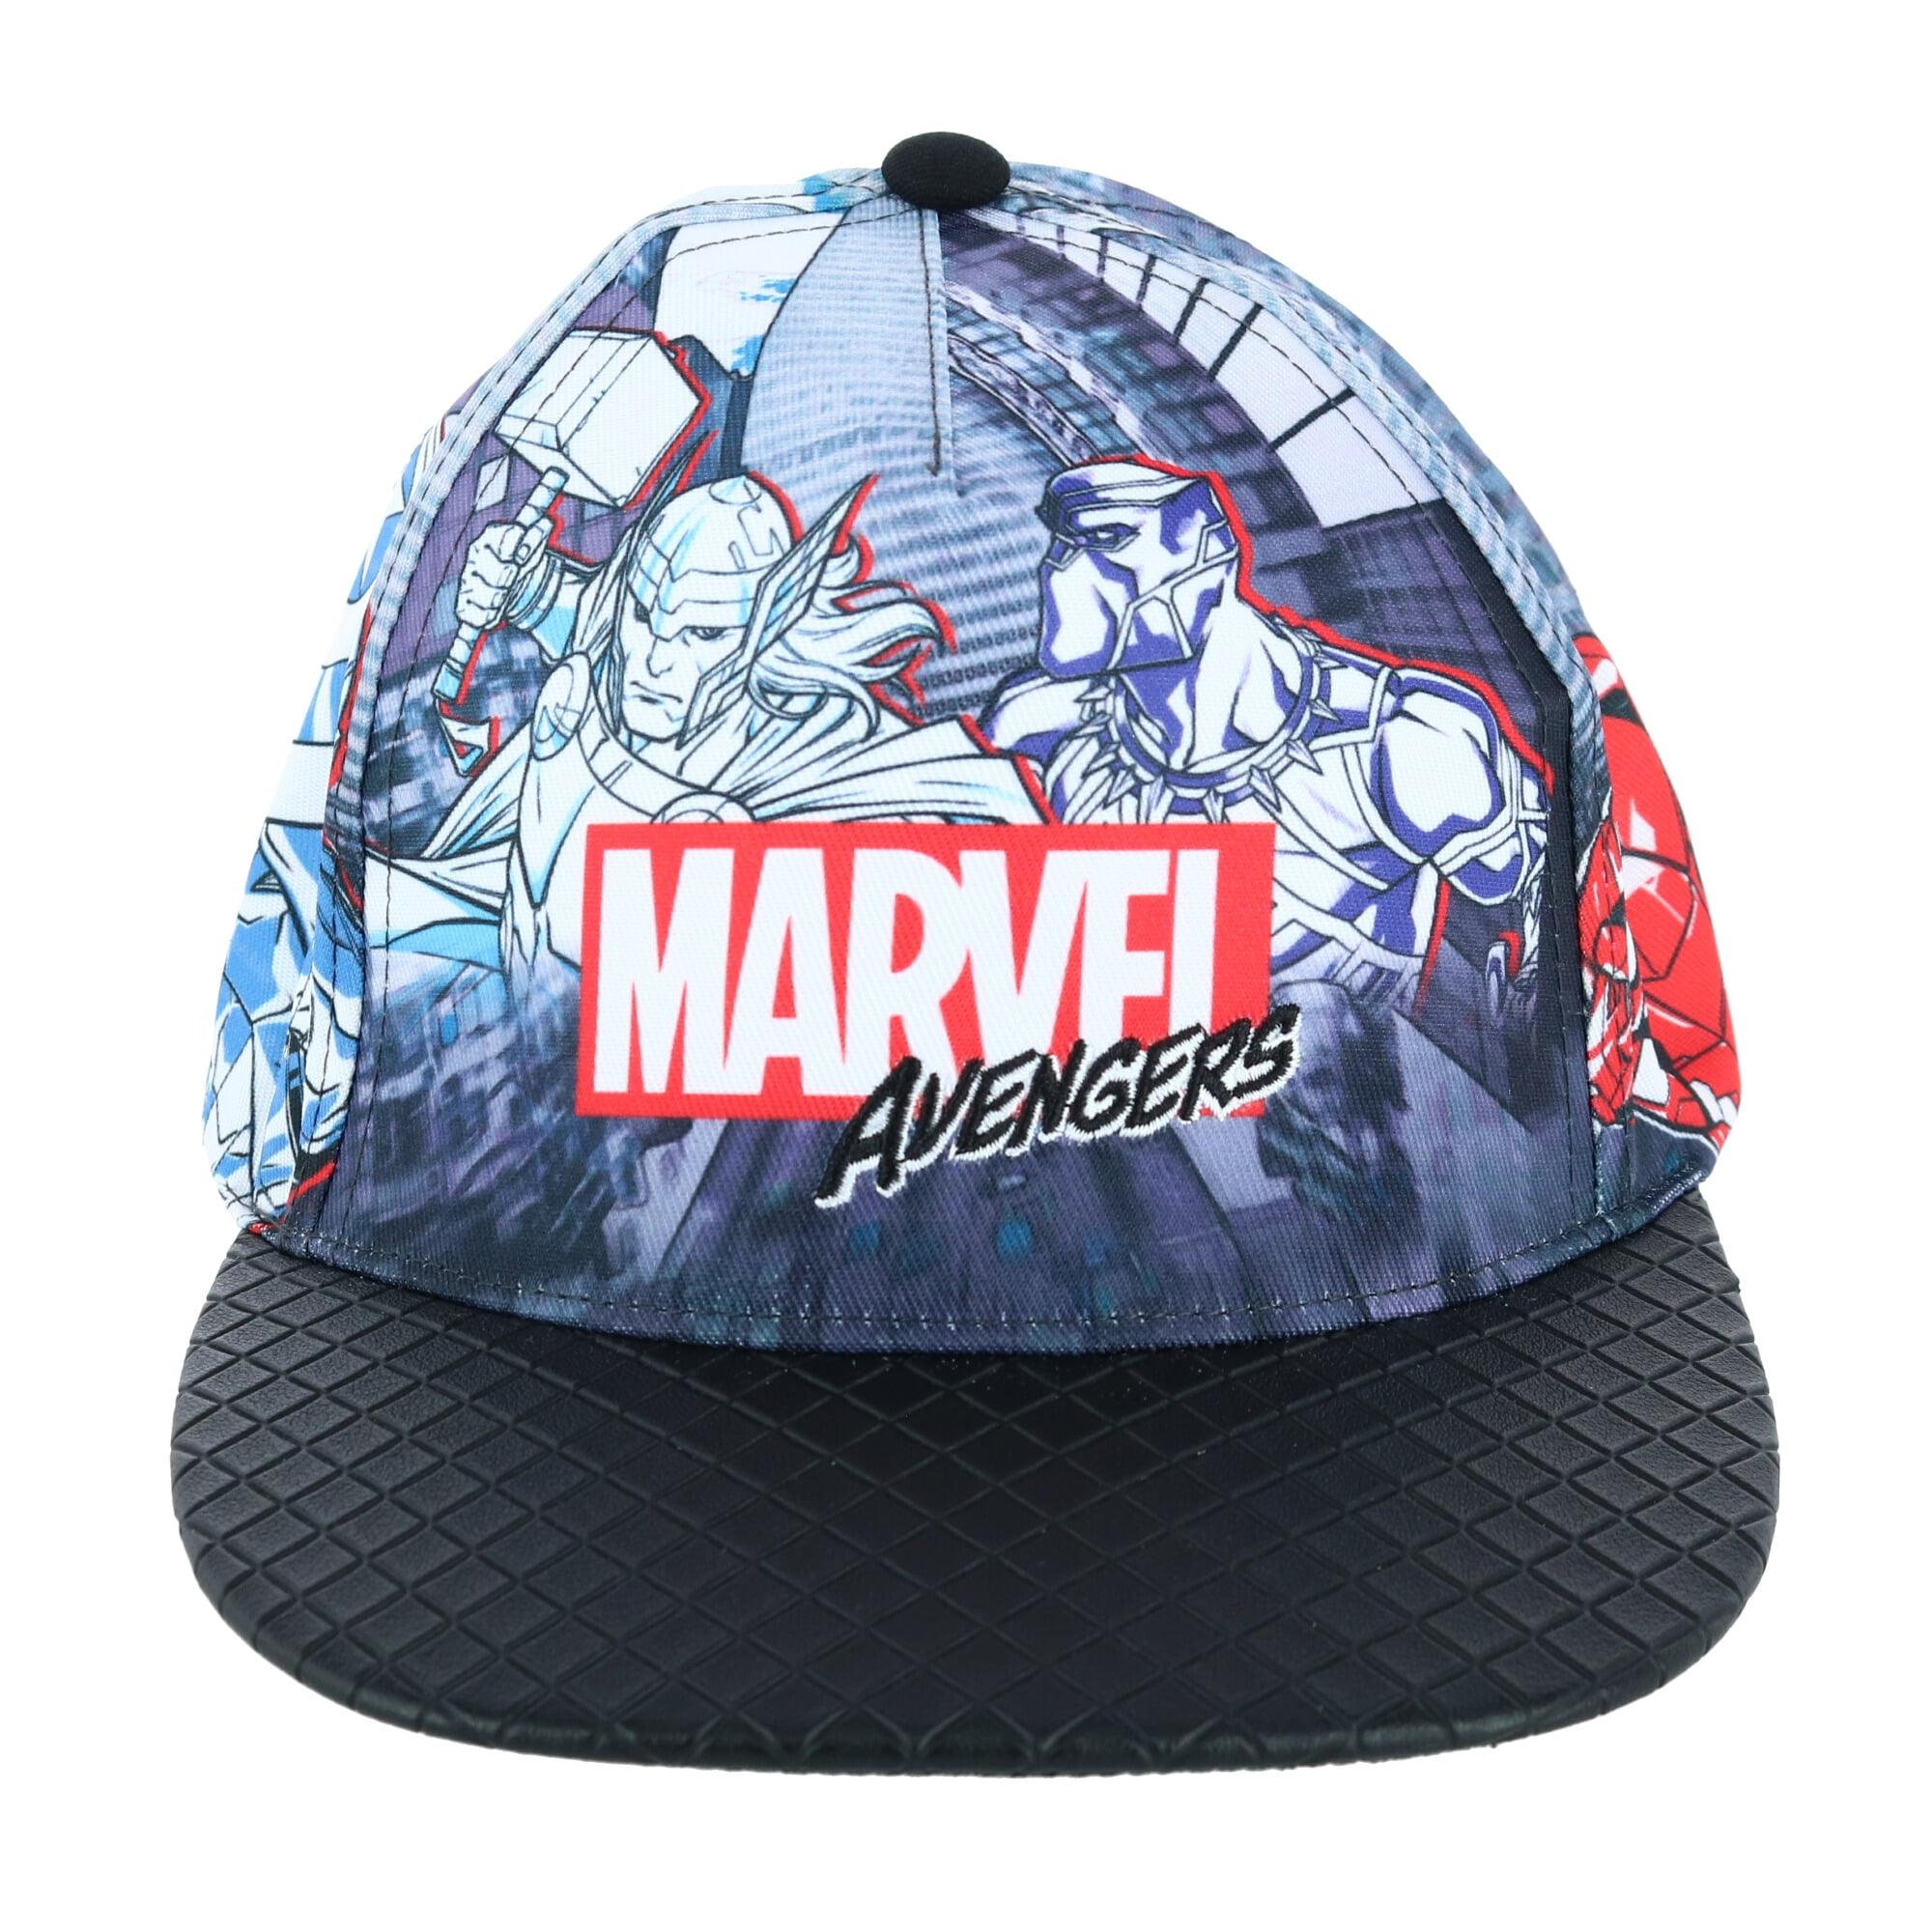 Textiel Trade Kids' Marvel Avengers Baseball Cap | Walmart Canada